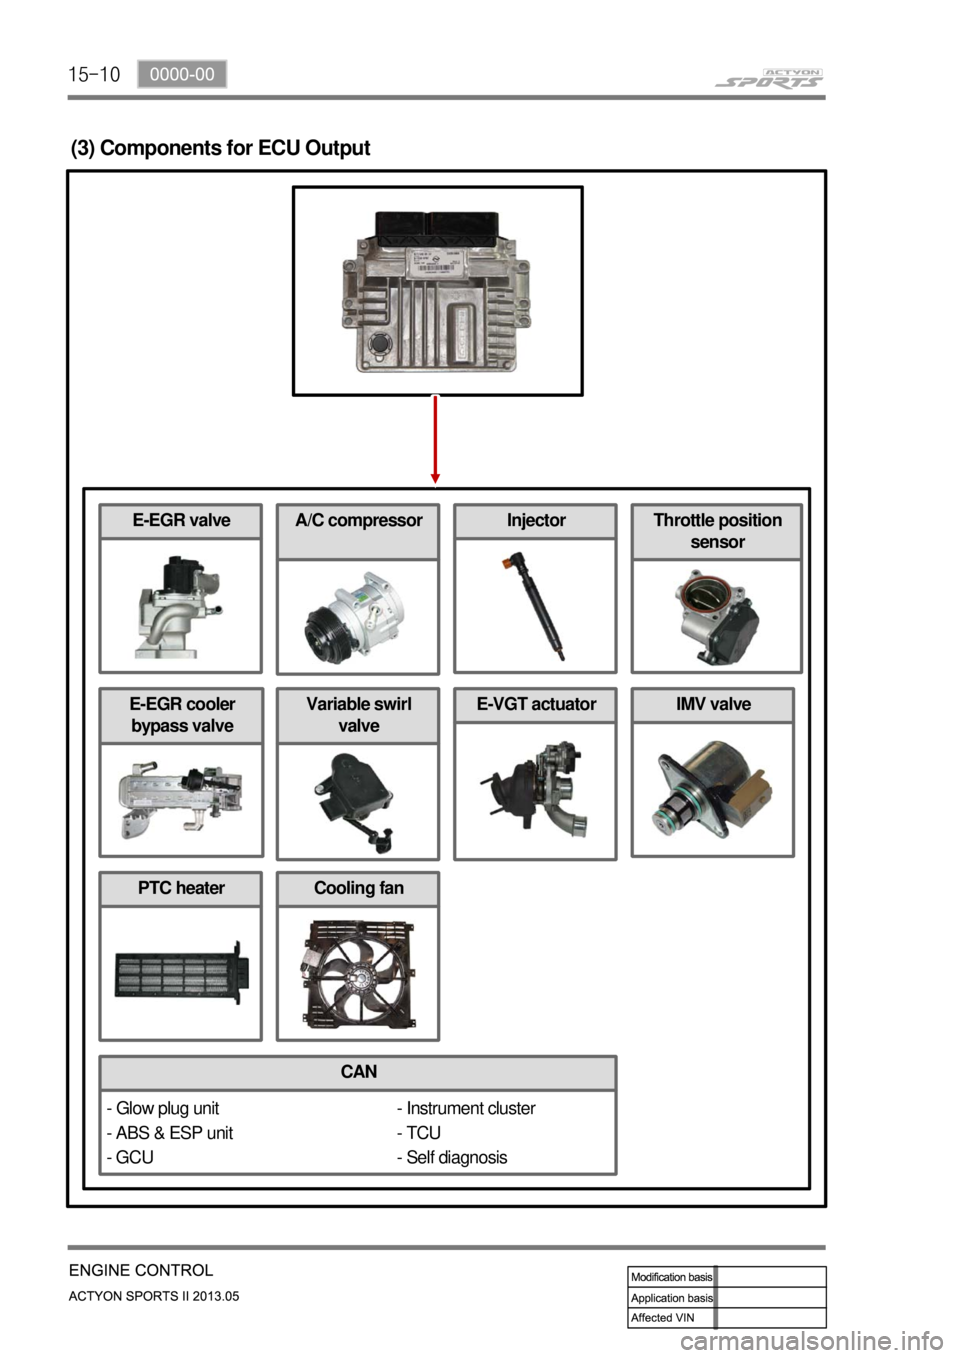 SSANGYONG NEW ACTYON SPORTS 2013  Service Manual 15-10
(3) Components for ECU Output
CAN
E-EGR cooler 
bypass valve
- Instrument cluster
- TCU
- Self diagnosis
PTC heaterCooling fan
E-EGR valve
Variable swirl 
valveE-VGT actuatorIMV valve
A/C compre